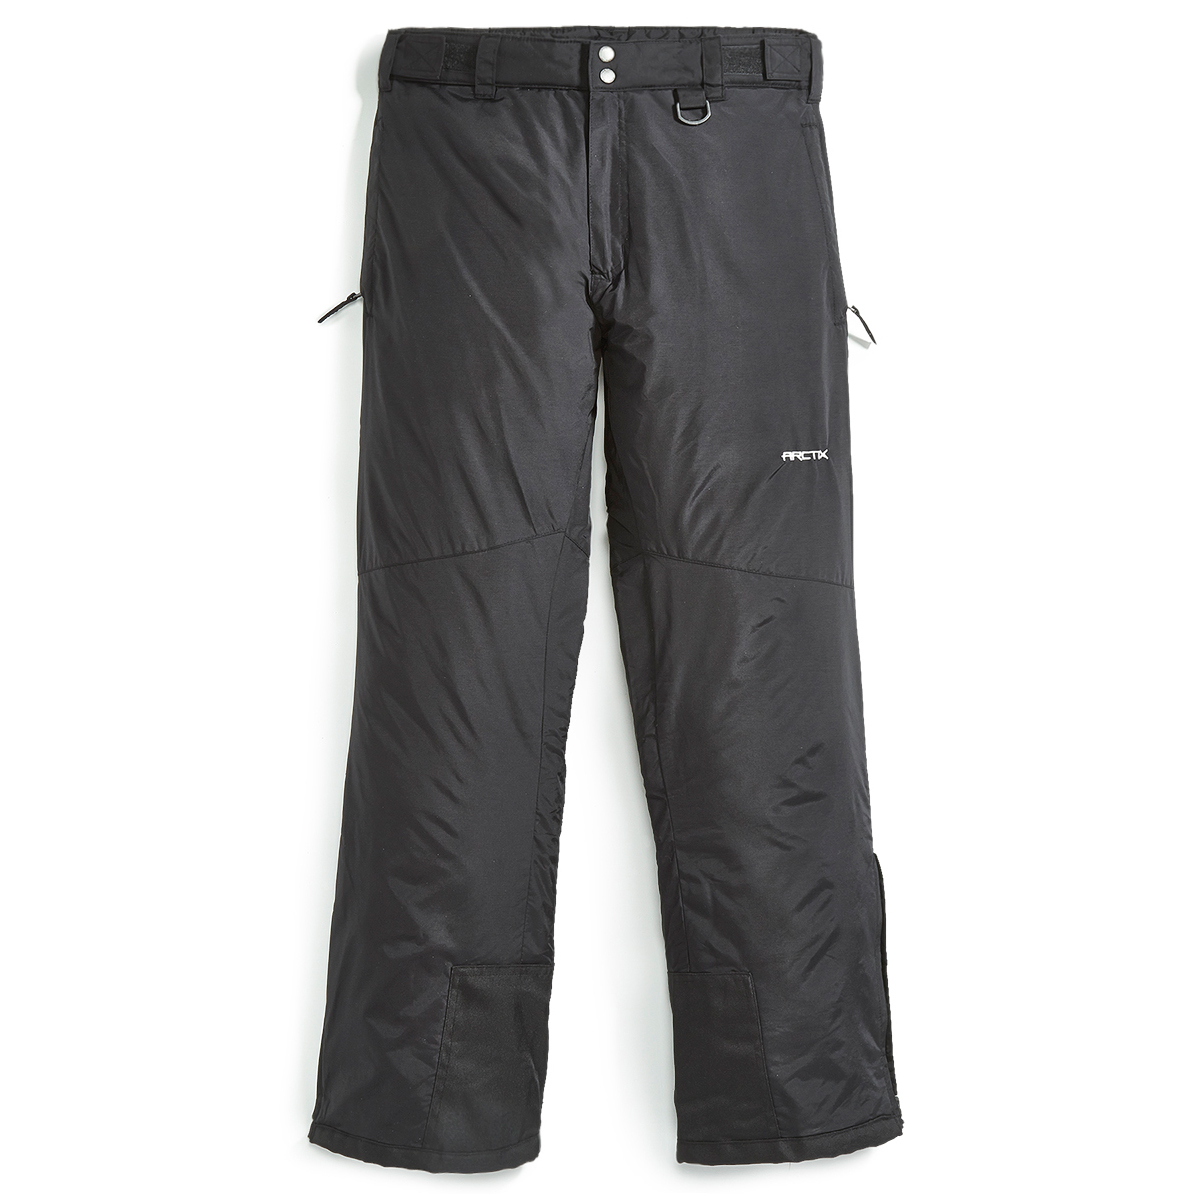 Arctix Men's Classic Ski Pants - Black, XXL